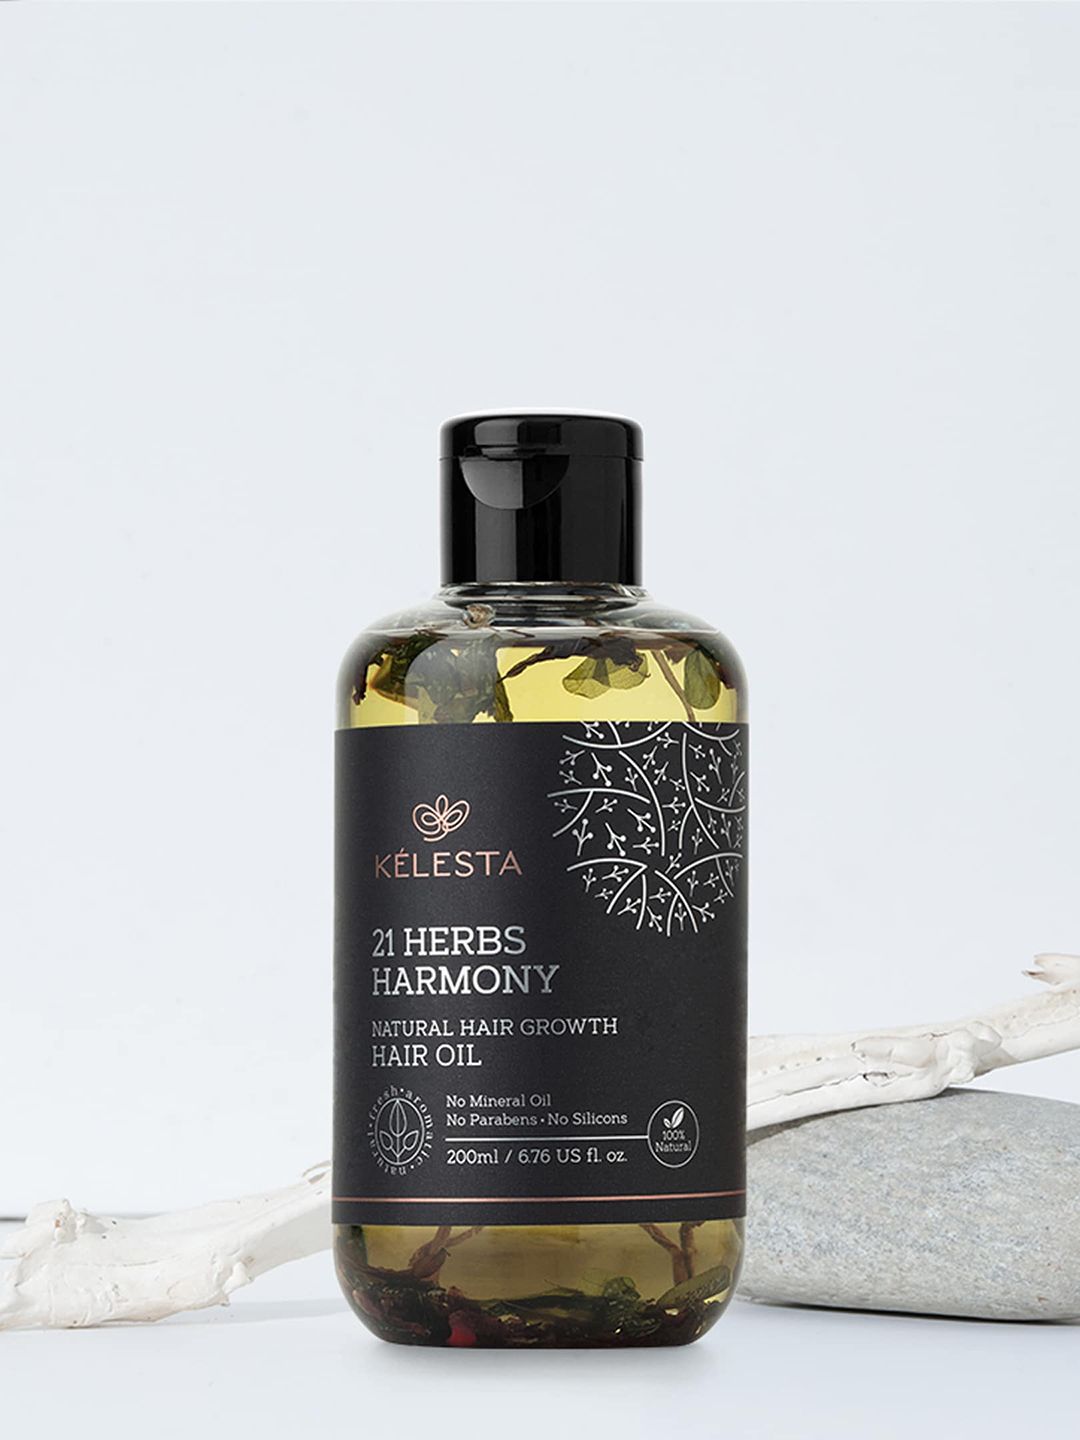 KELESTA 21 Herbs Harmony Natural Hair Growth Hair Oil - 200 ml Price in India